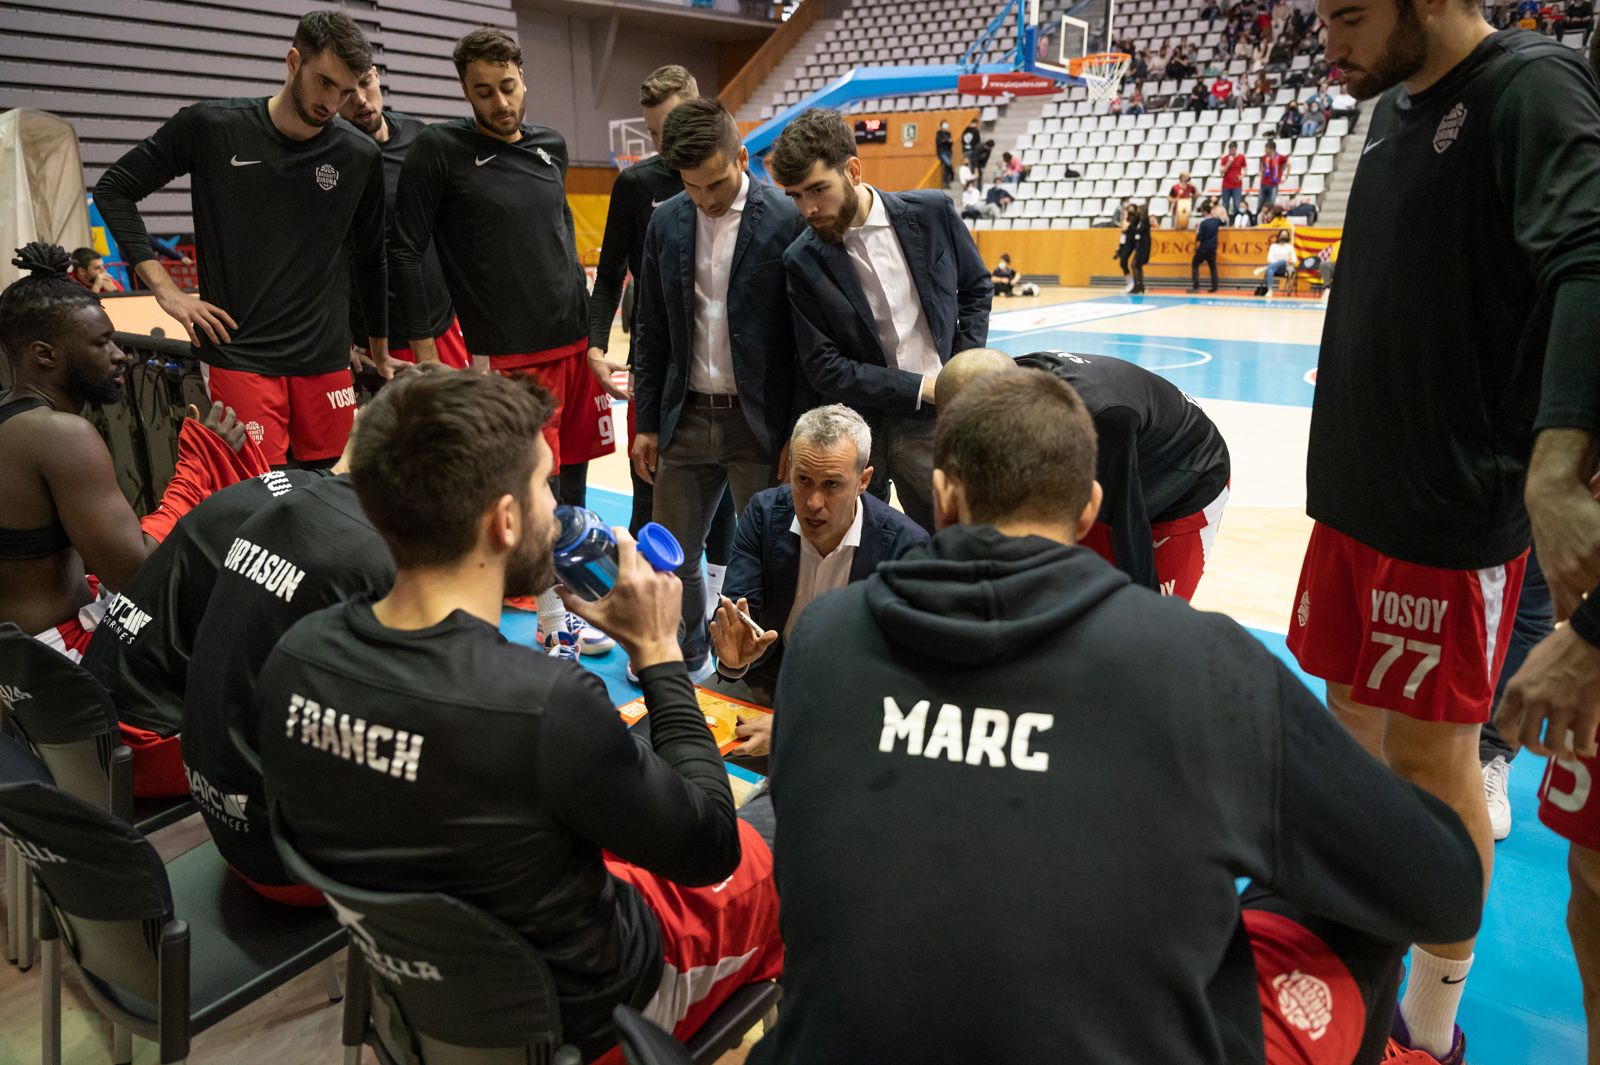 Basket Girona - Palencia